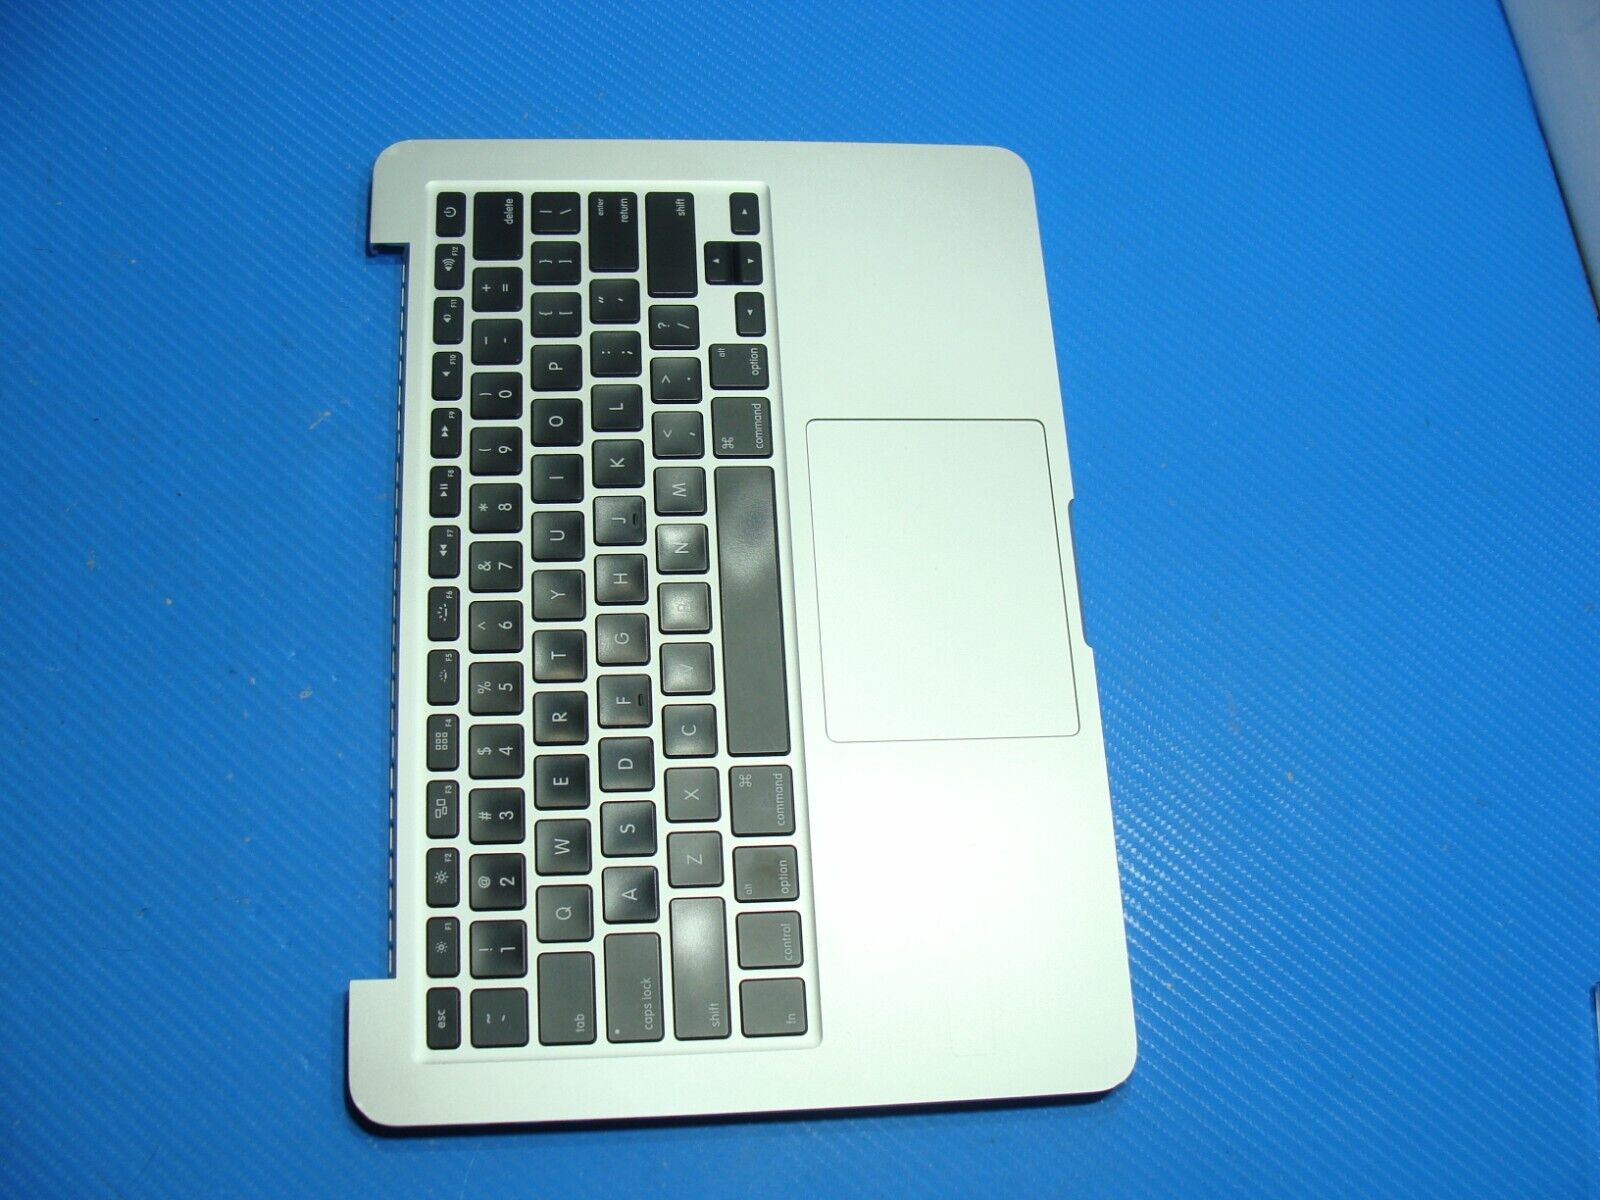 MacBook Pro A1502 MF841LL/A Early 2015 13